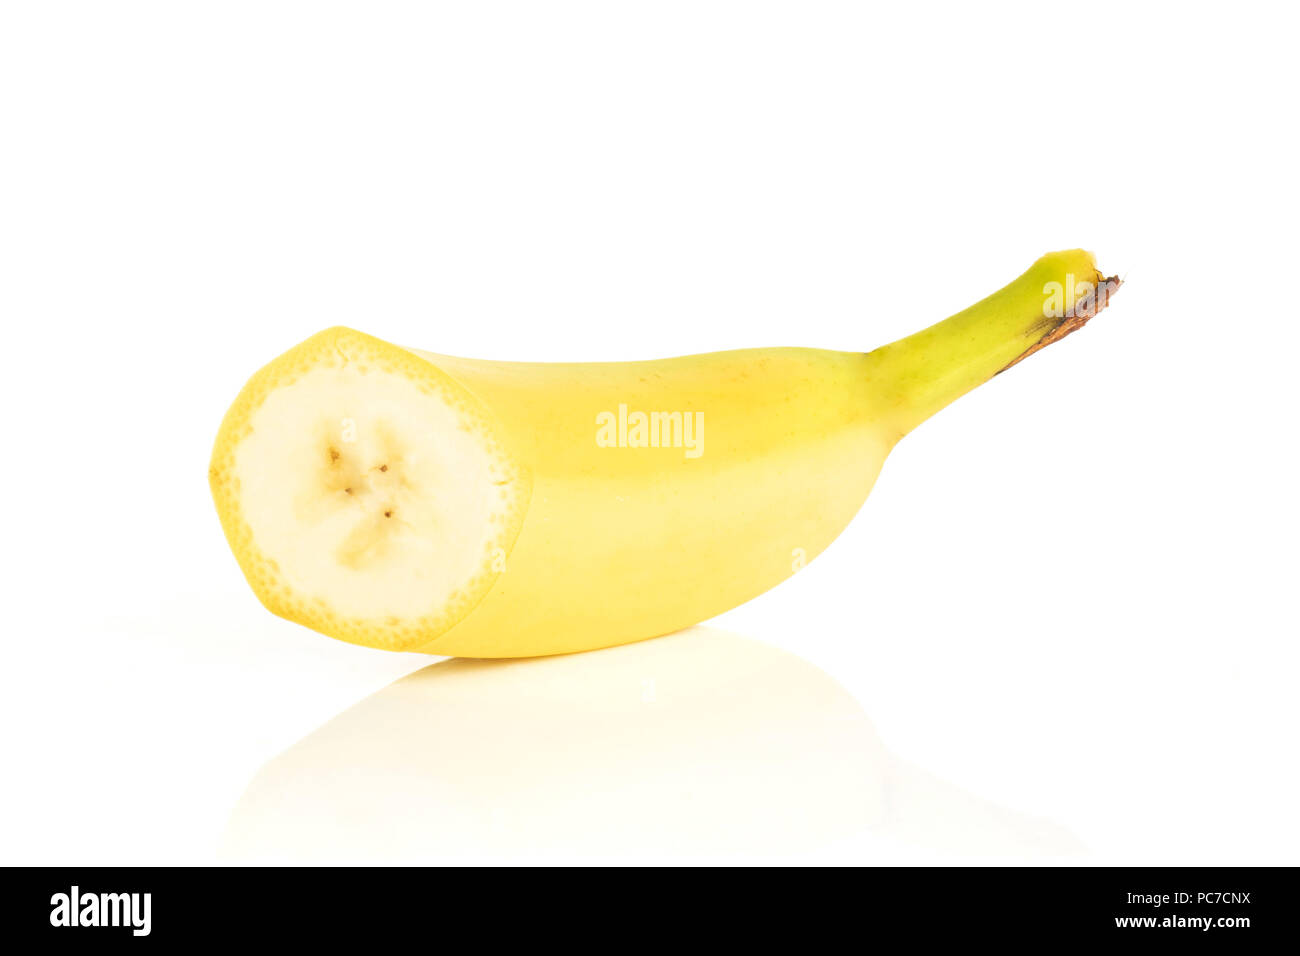 One half of fresh yellow banana isolated on white background Stock Photo